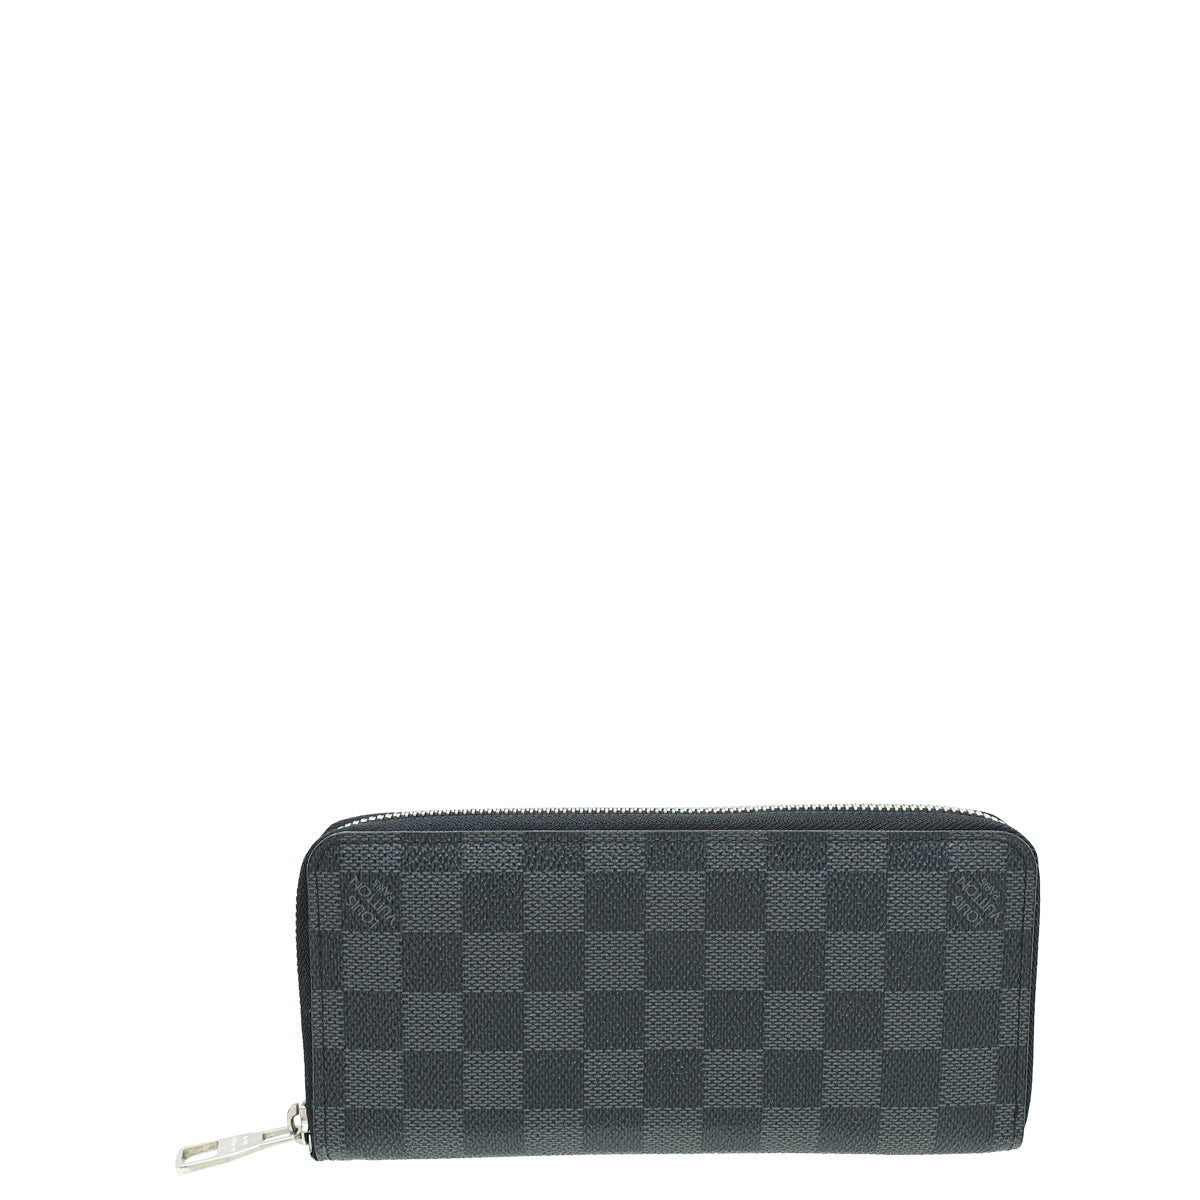 Louis Vuitton Compact Zippy Wallet Damier Graphite Black/Grey in